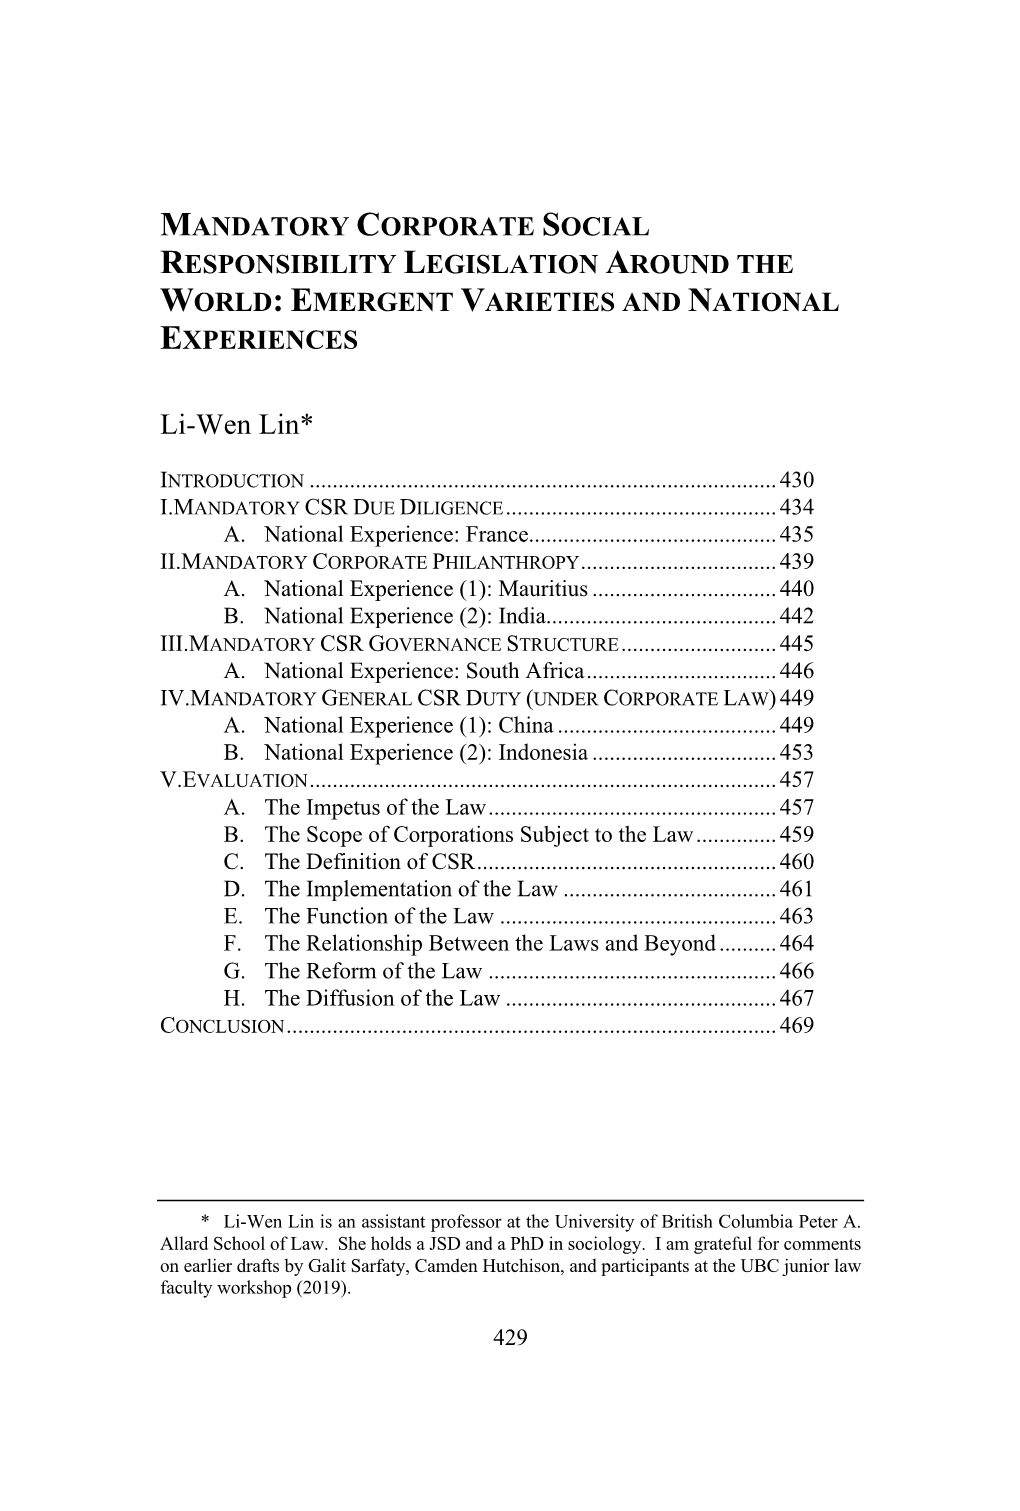 Mandatory Corporate Social Responsibility Legislation Around the World: Emergent Varieties and National Experiences